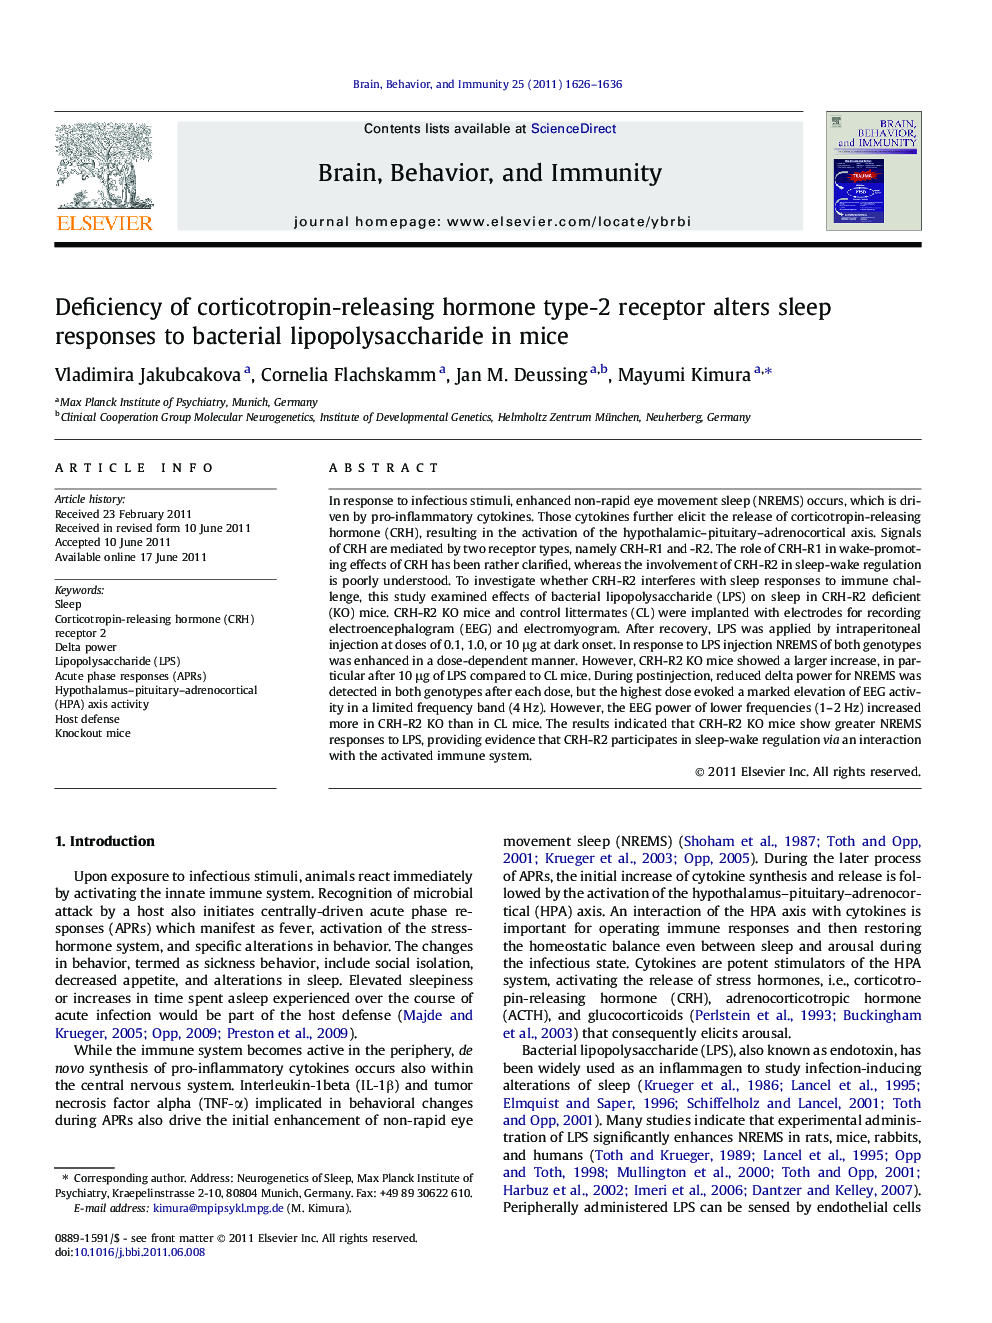 Deficiency of corticotropin-releasing hormone type-2 receptor alters sleep responses to bacterial lipopolysaccharide in mice